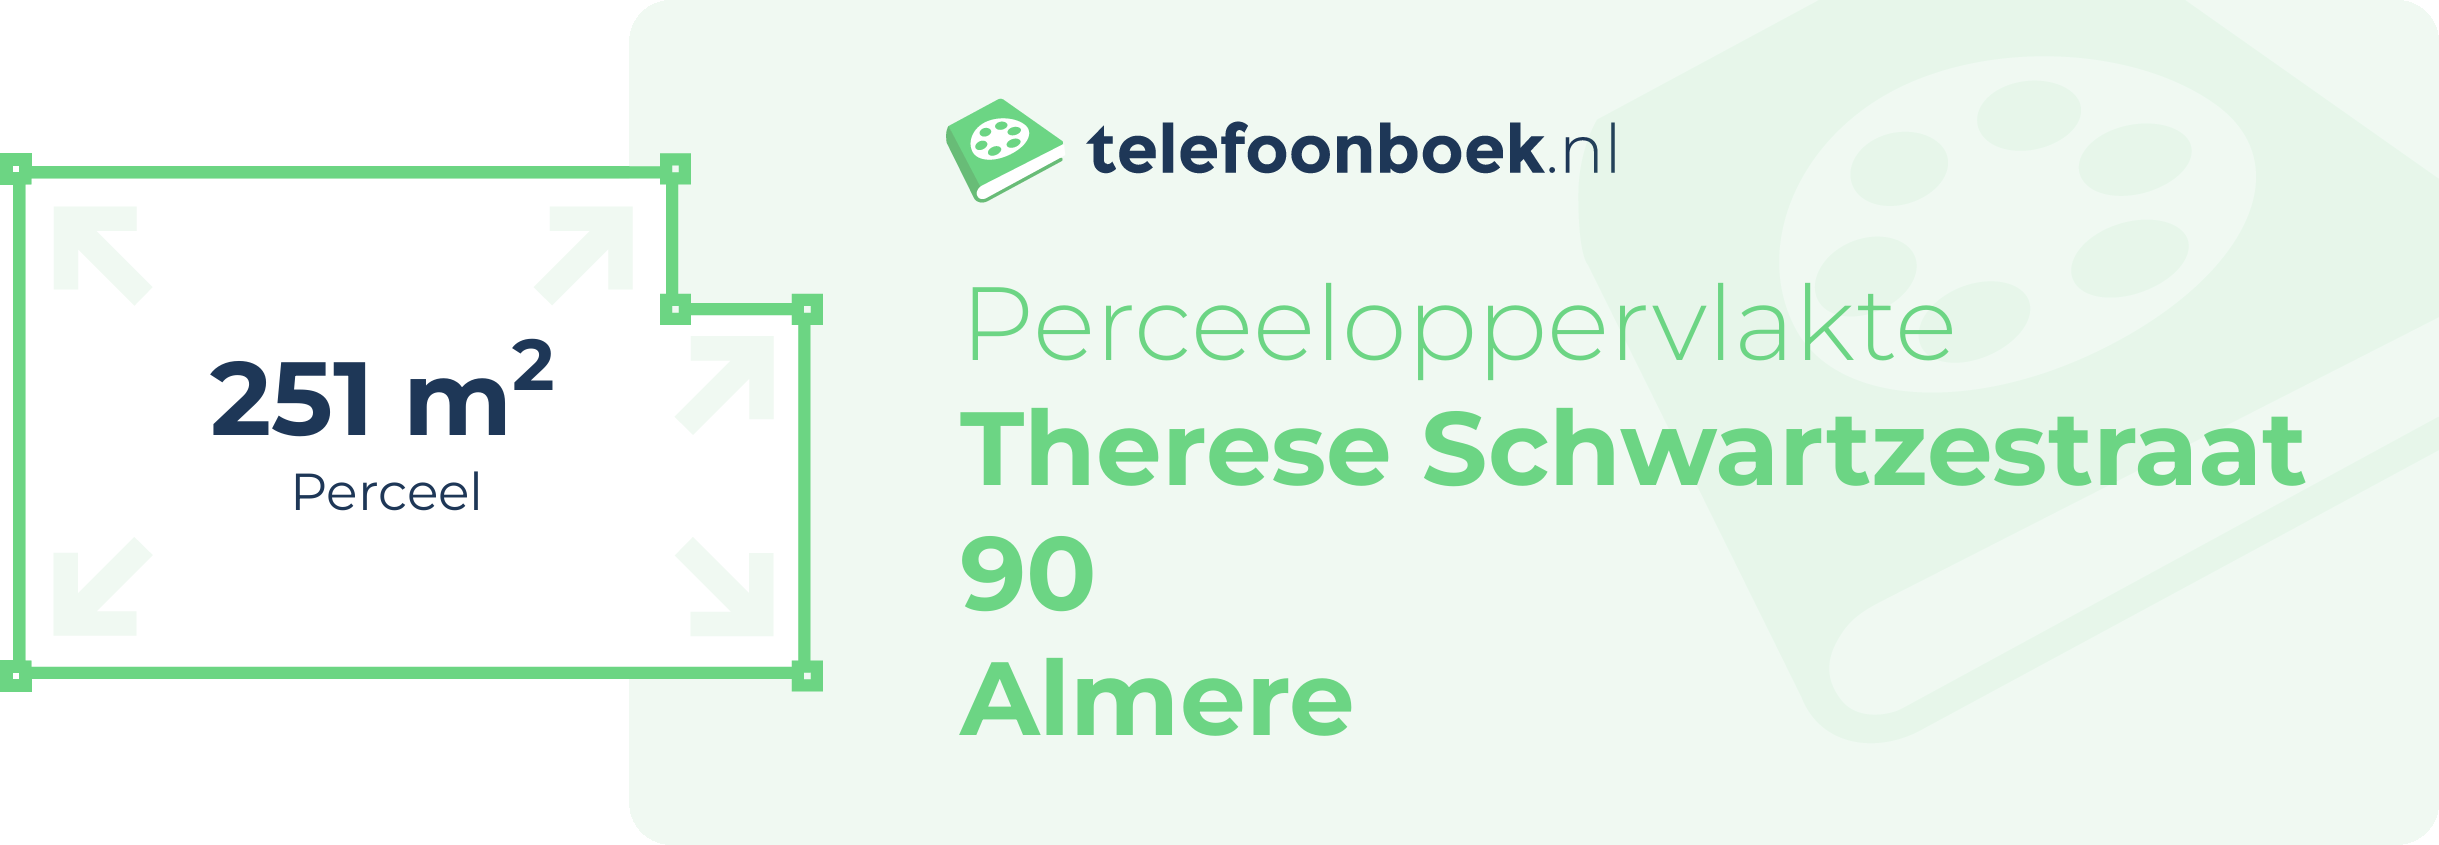 Perceeloppervlakte Therese Schwartzestraat 90 Almere